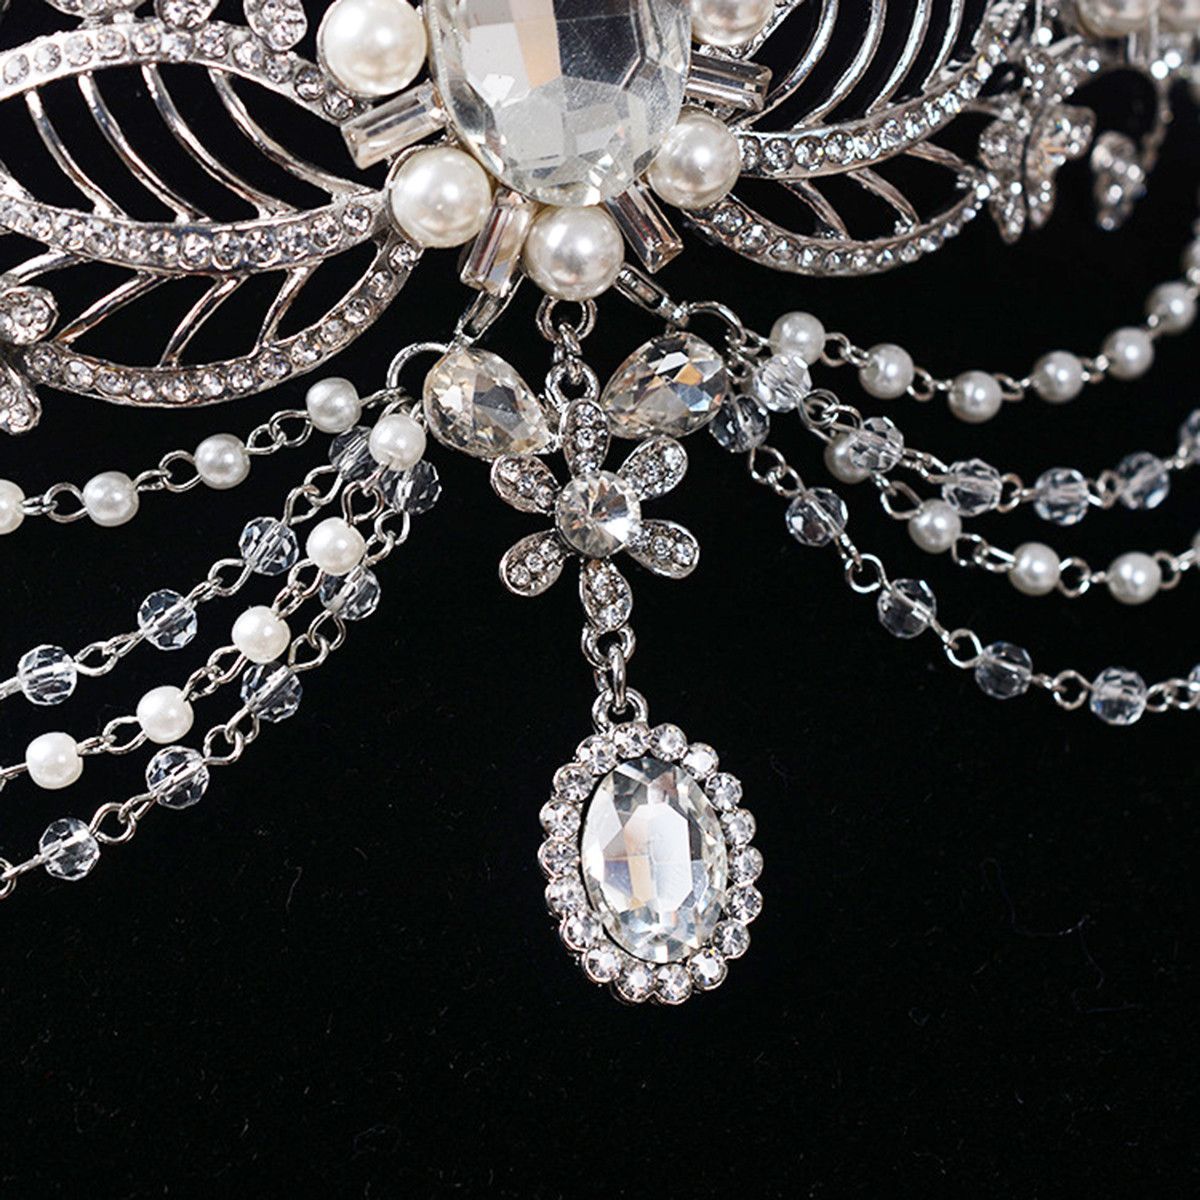 Wedding-Headband-Hair-Accessories-Queen-Crown-Bridal-Tiara-Crystal-Pear-1118395